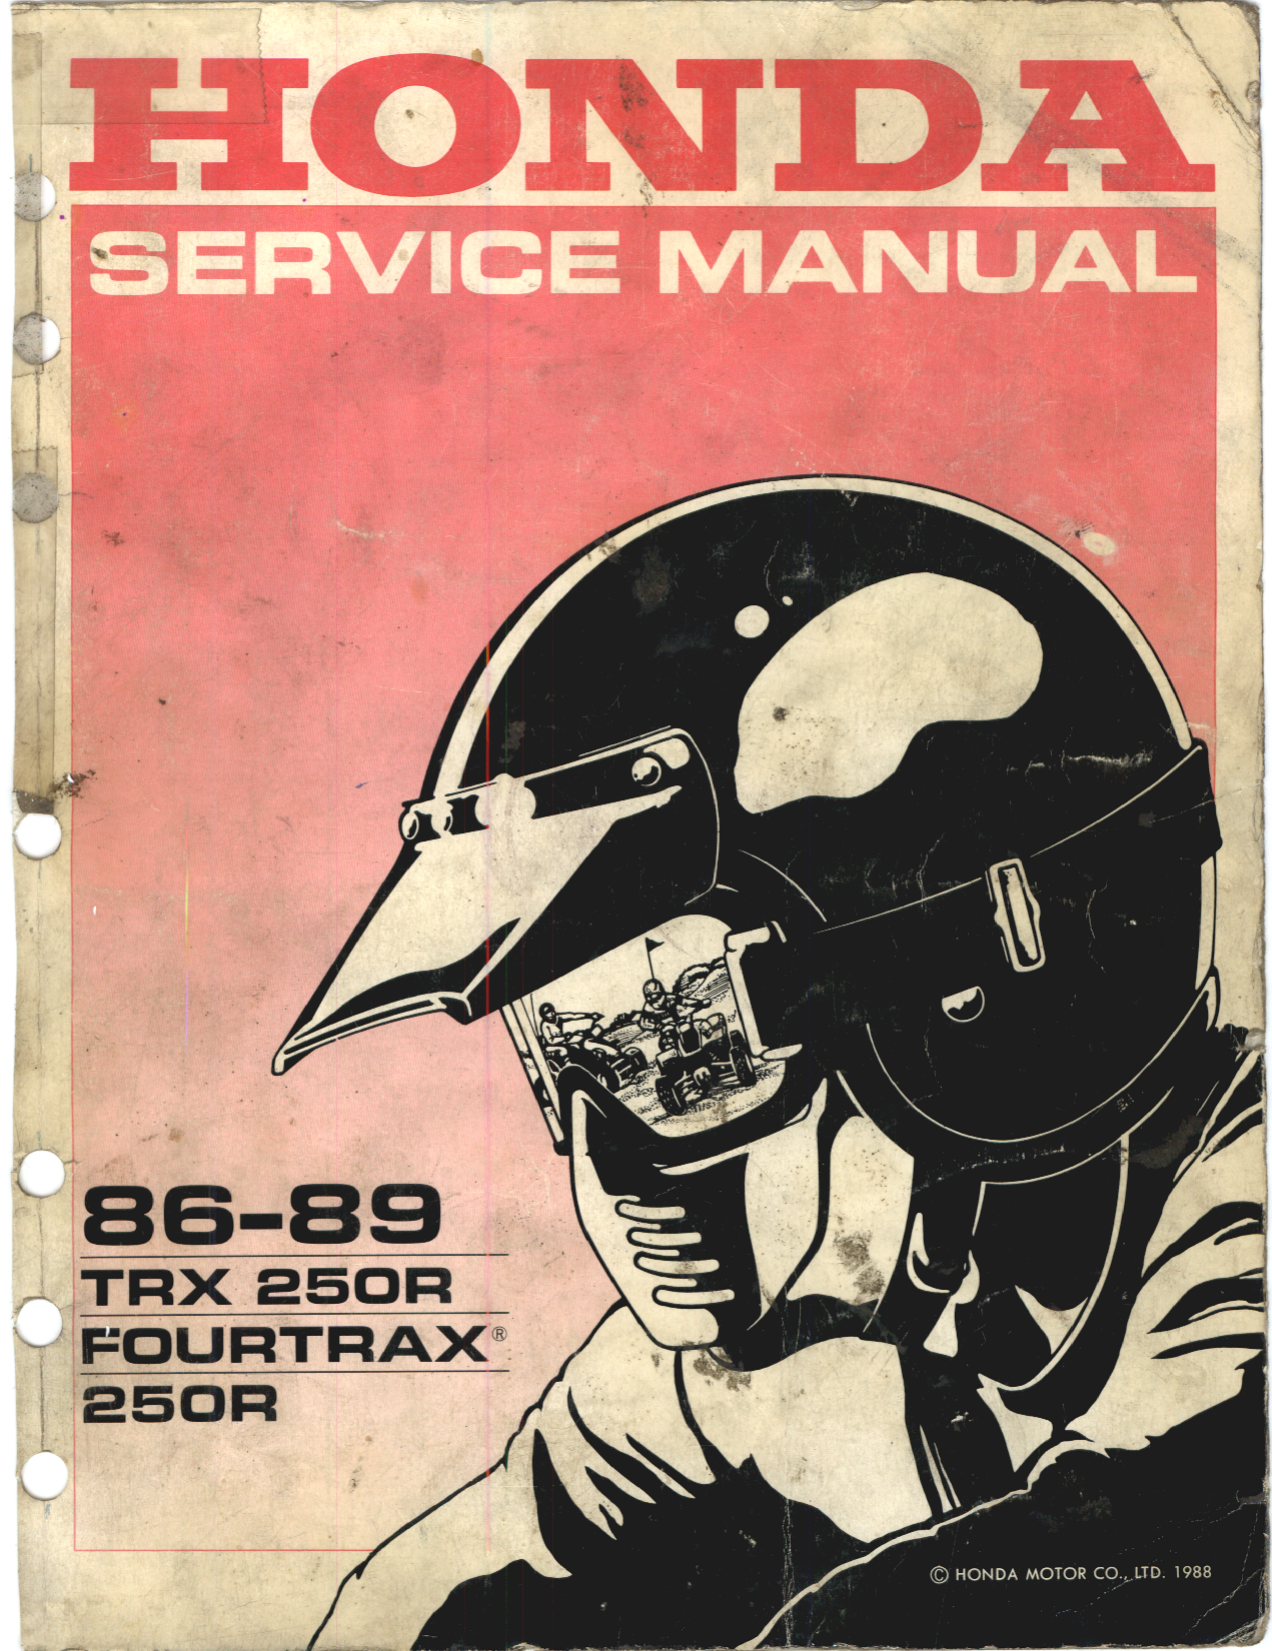 1986-1989 Honda TRX 250R Fourtrax service manual Preview image 1